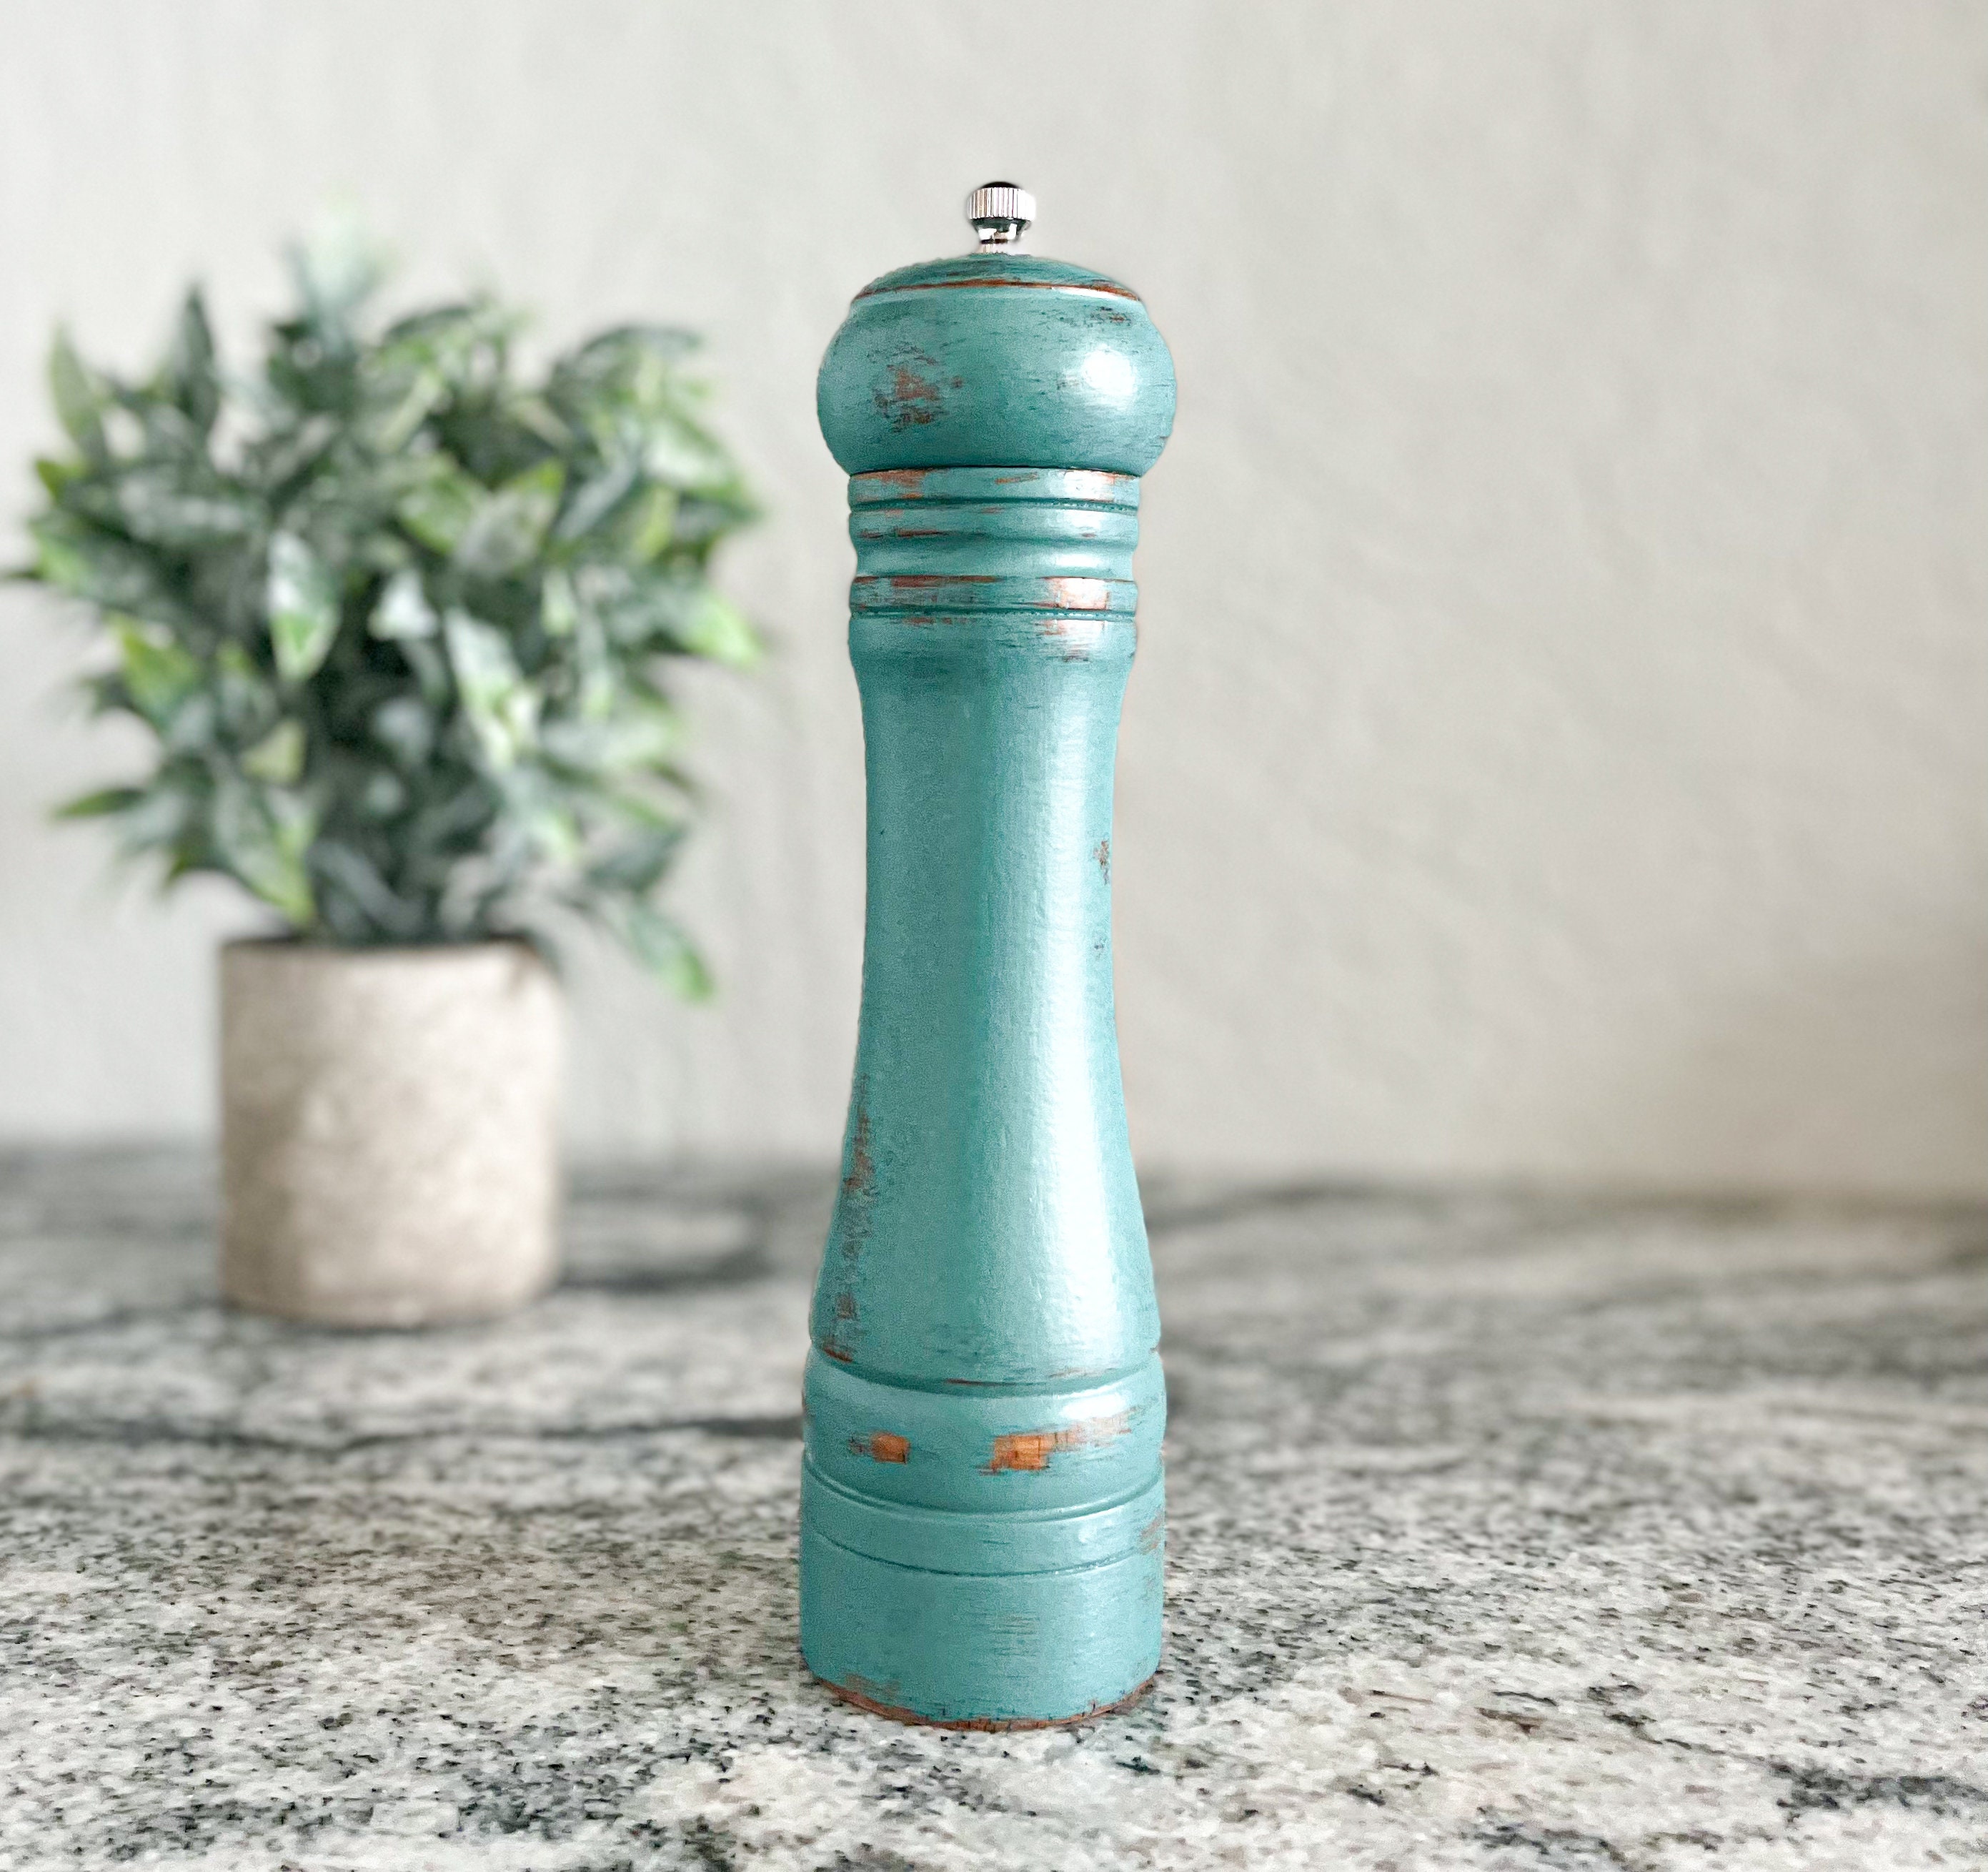 Pepper-Shaker-Glue-Bottle - Woodworking, Blog, Videos, Plans